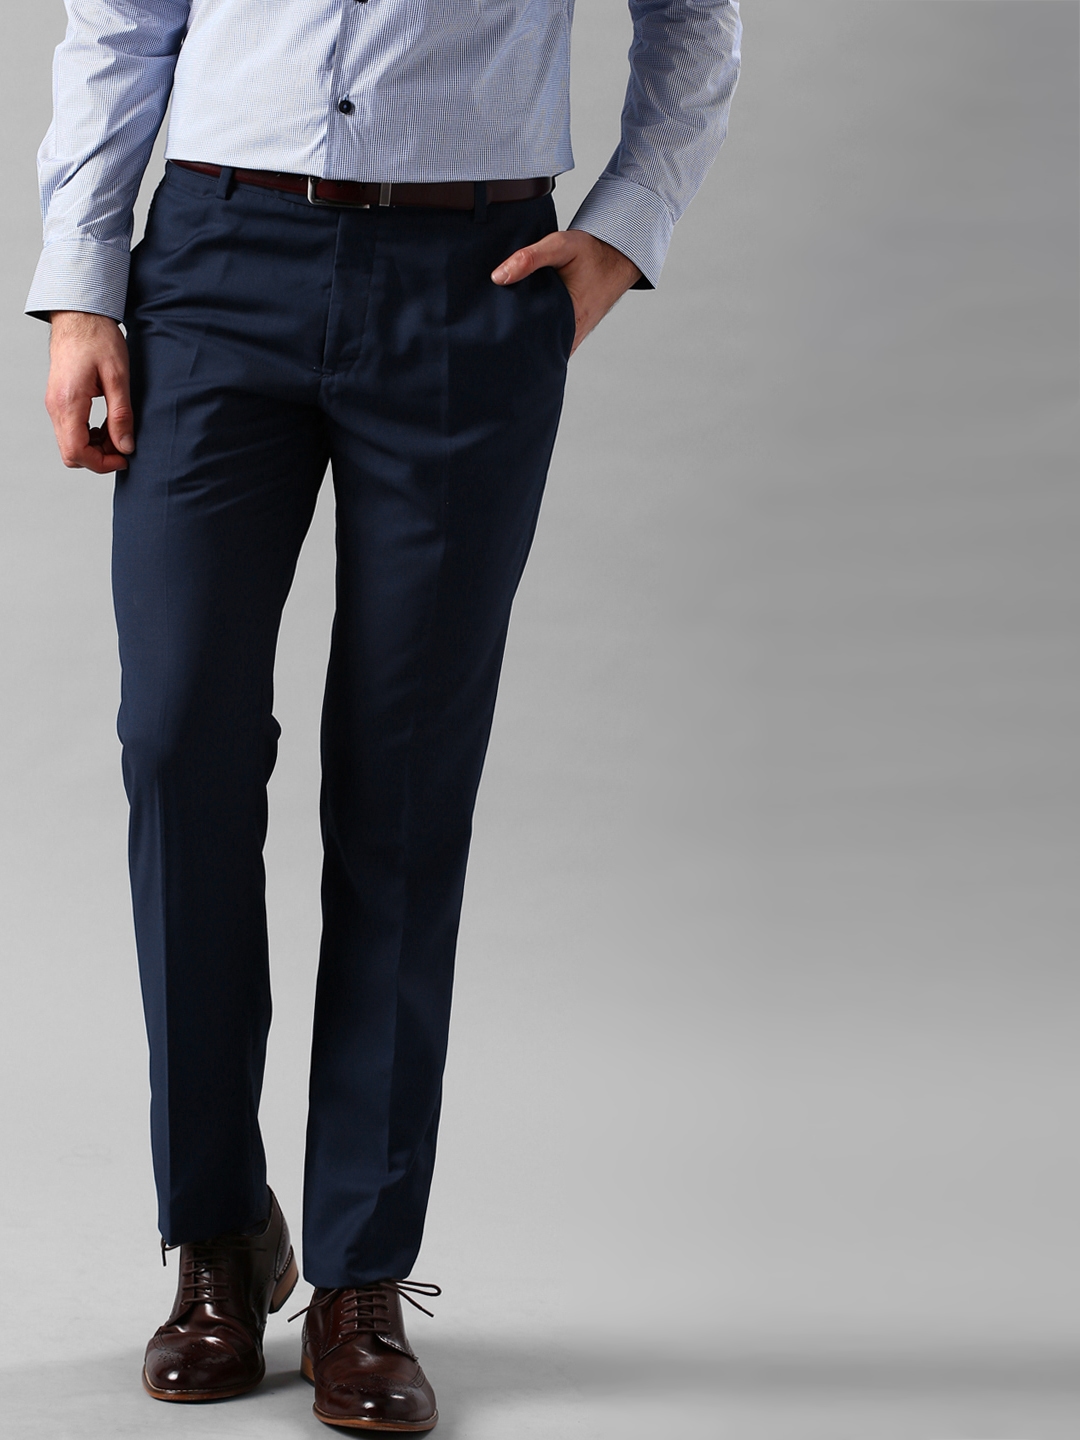 Next Look Regular Fit Men Dark Blue Trousers  Buy Next Look Regular Fit  Men Dark Blue Trousers Online at Best Prices in India  Flipkartcom